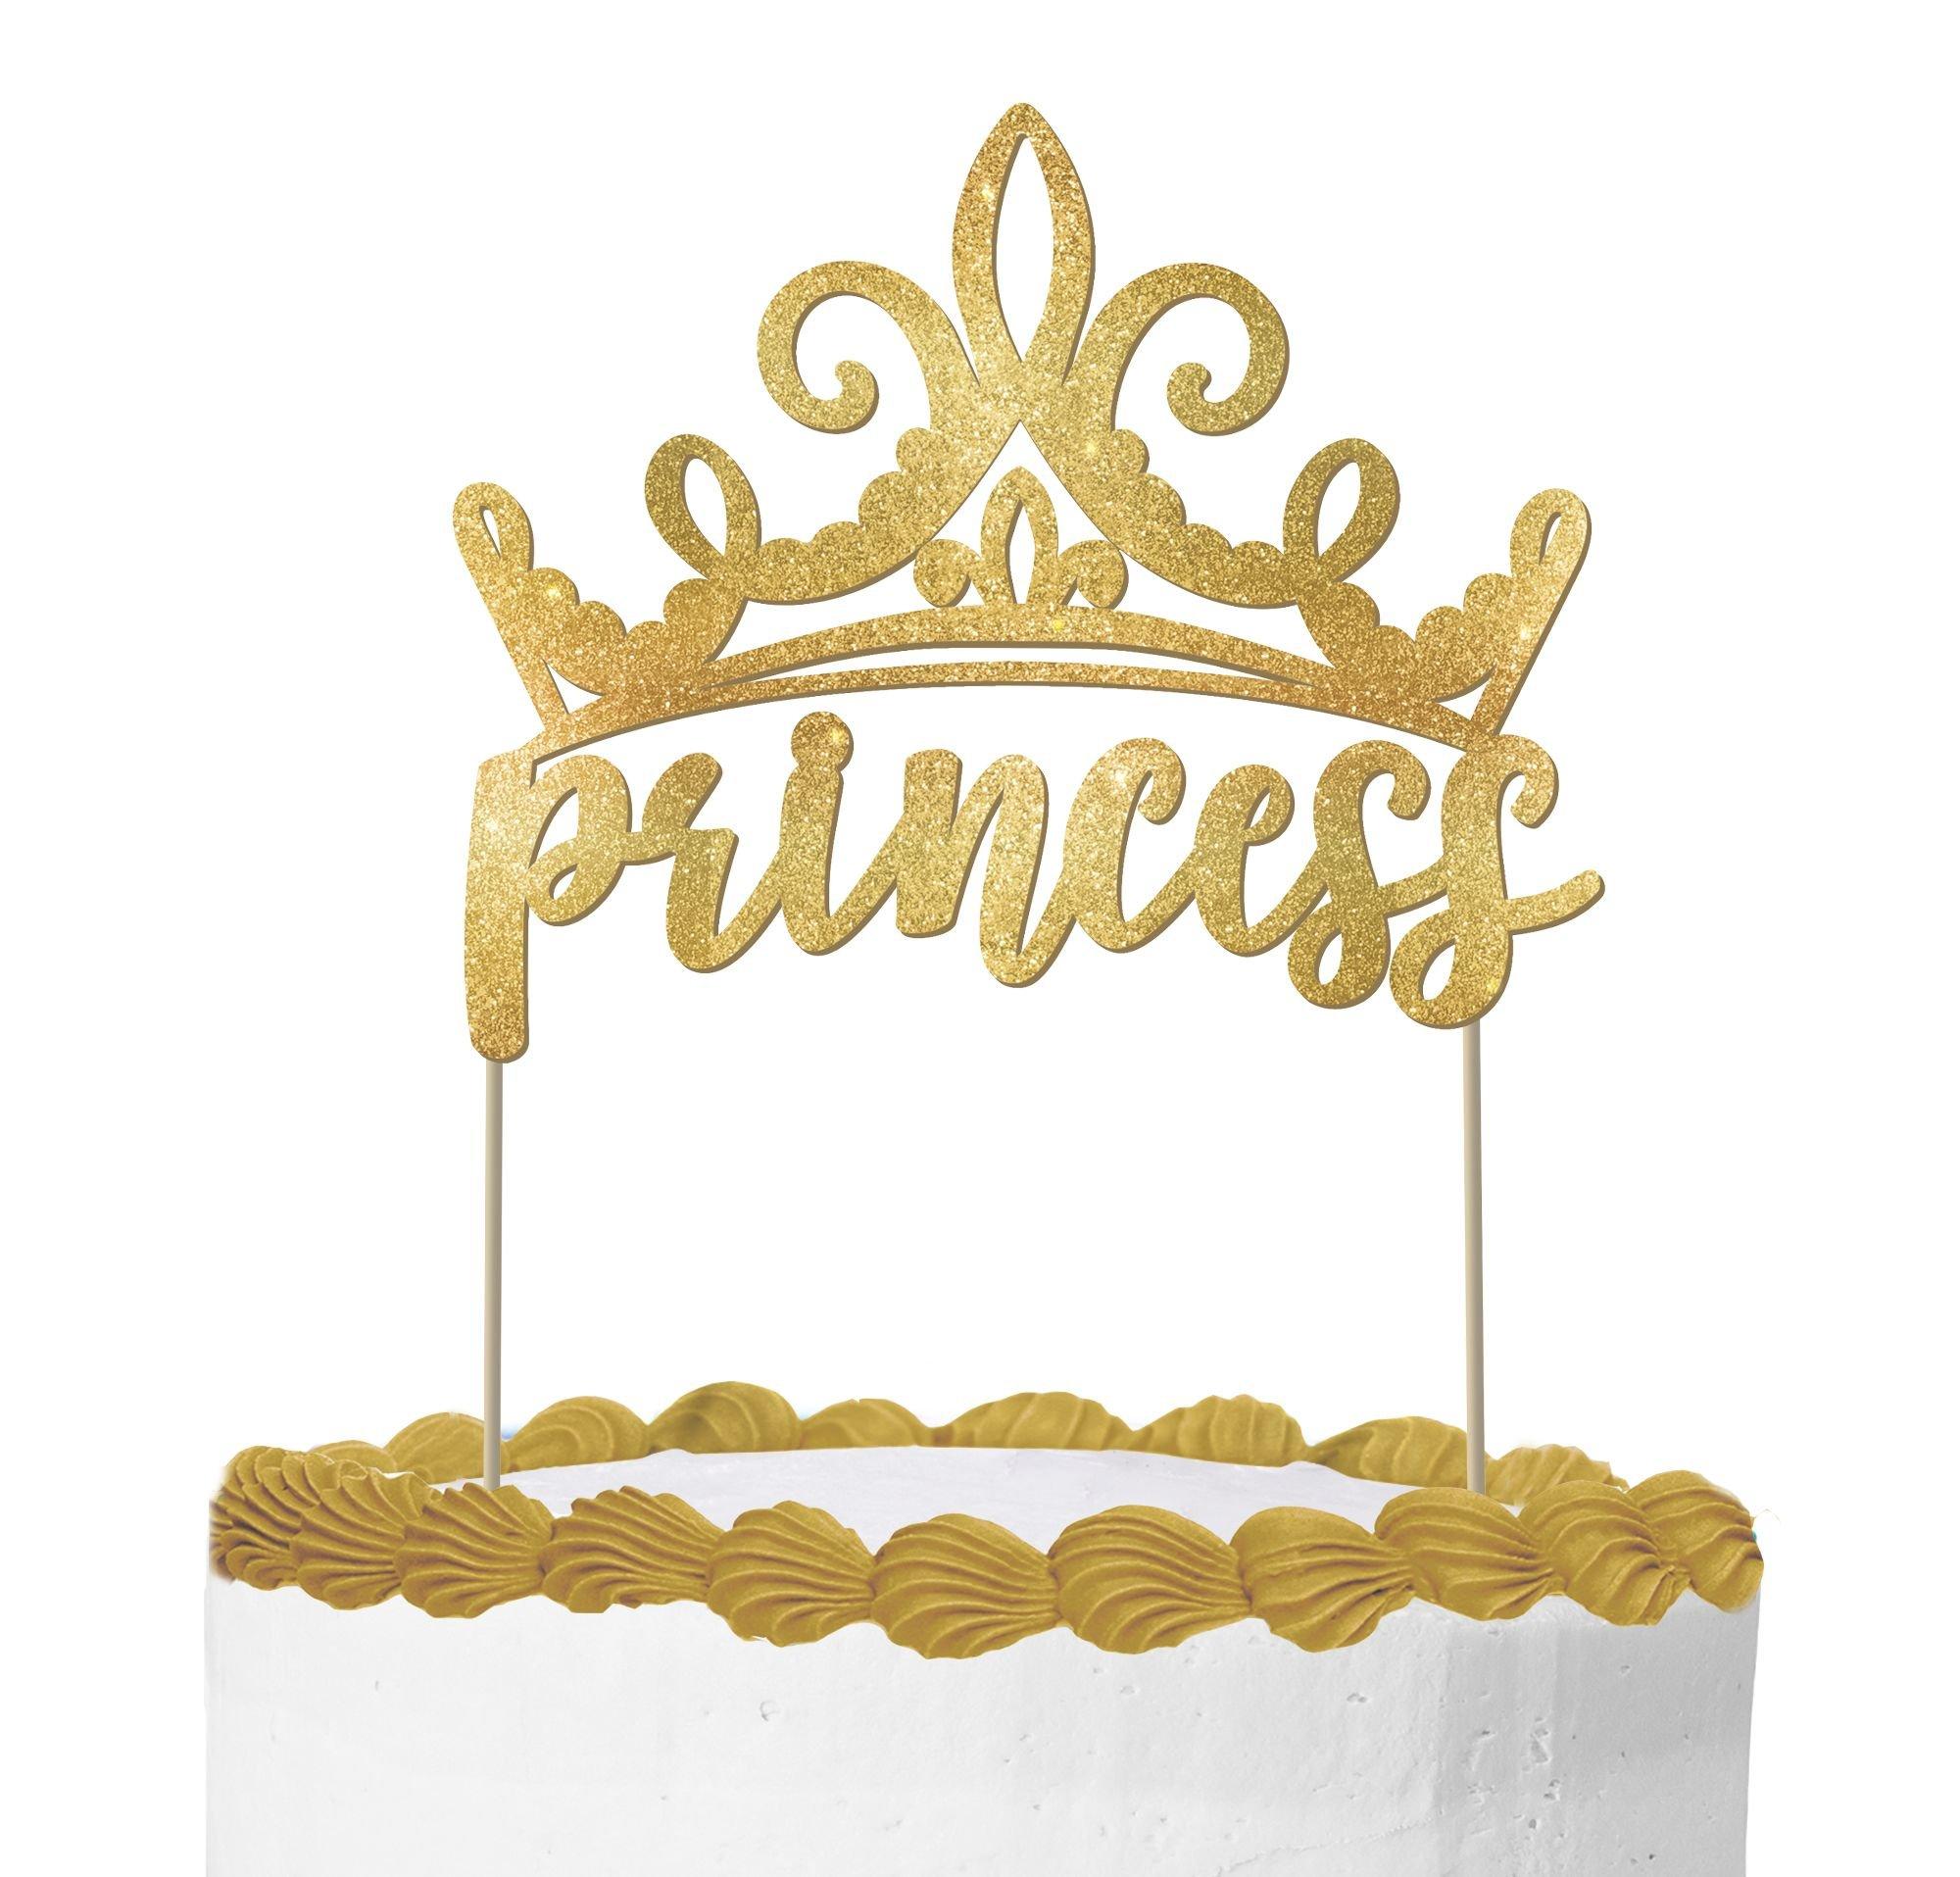 How to Make a Princess Cake Topper (Easy Step-by-step Tutorial)